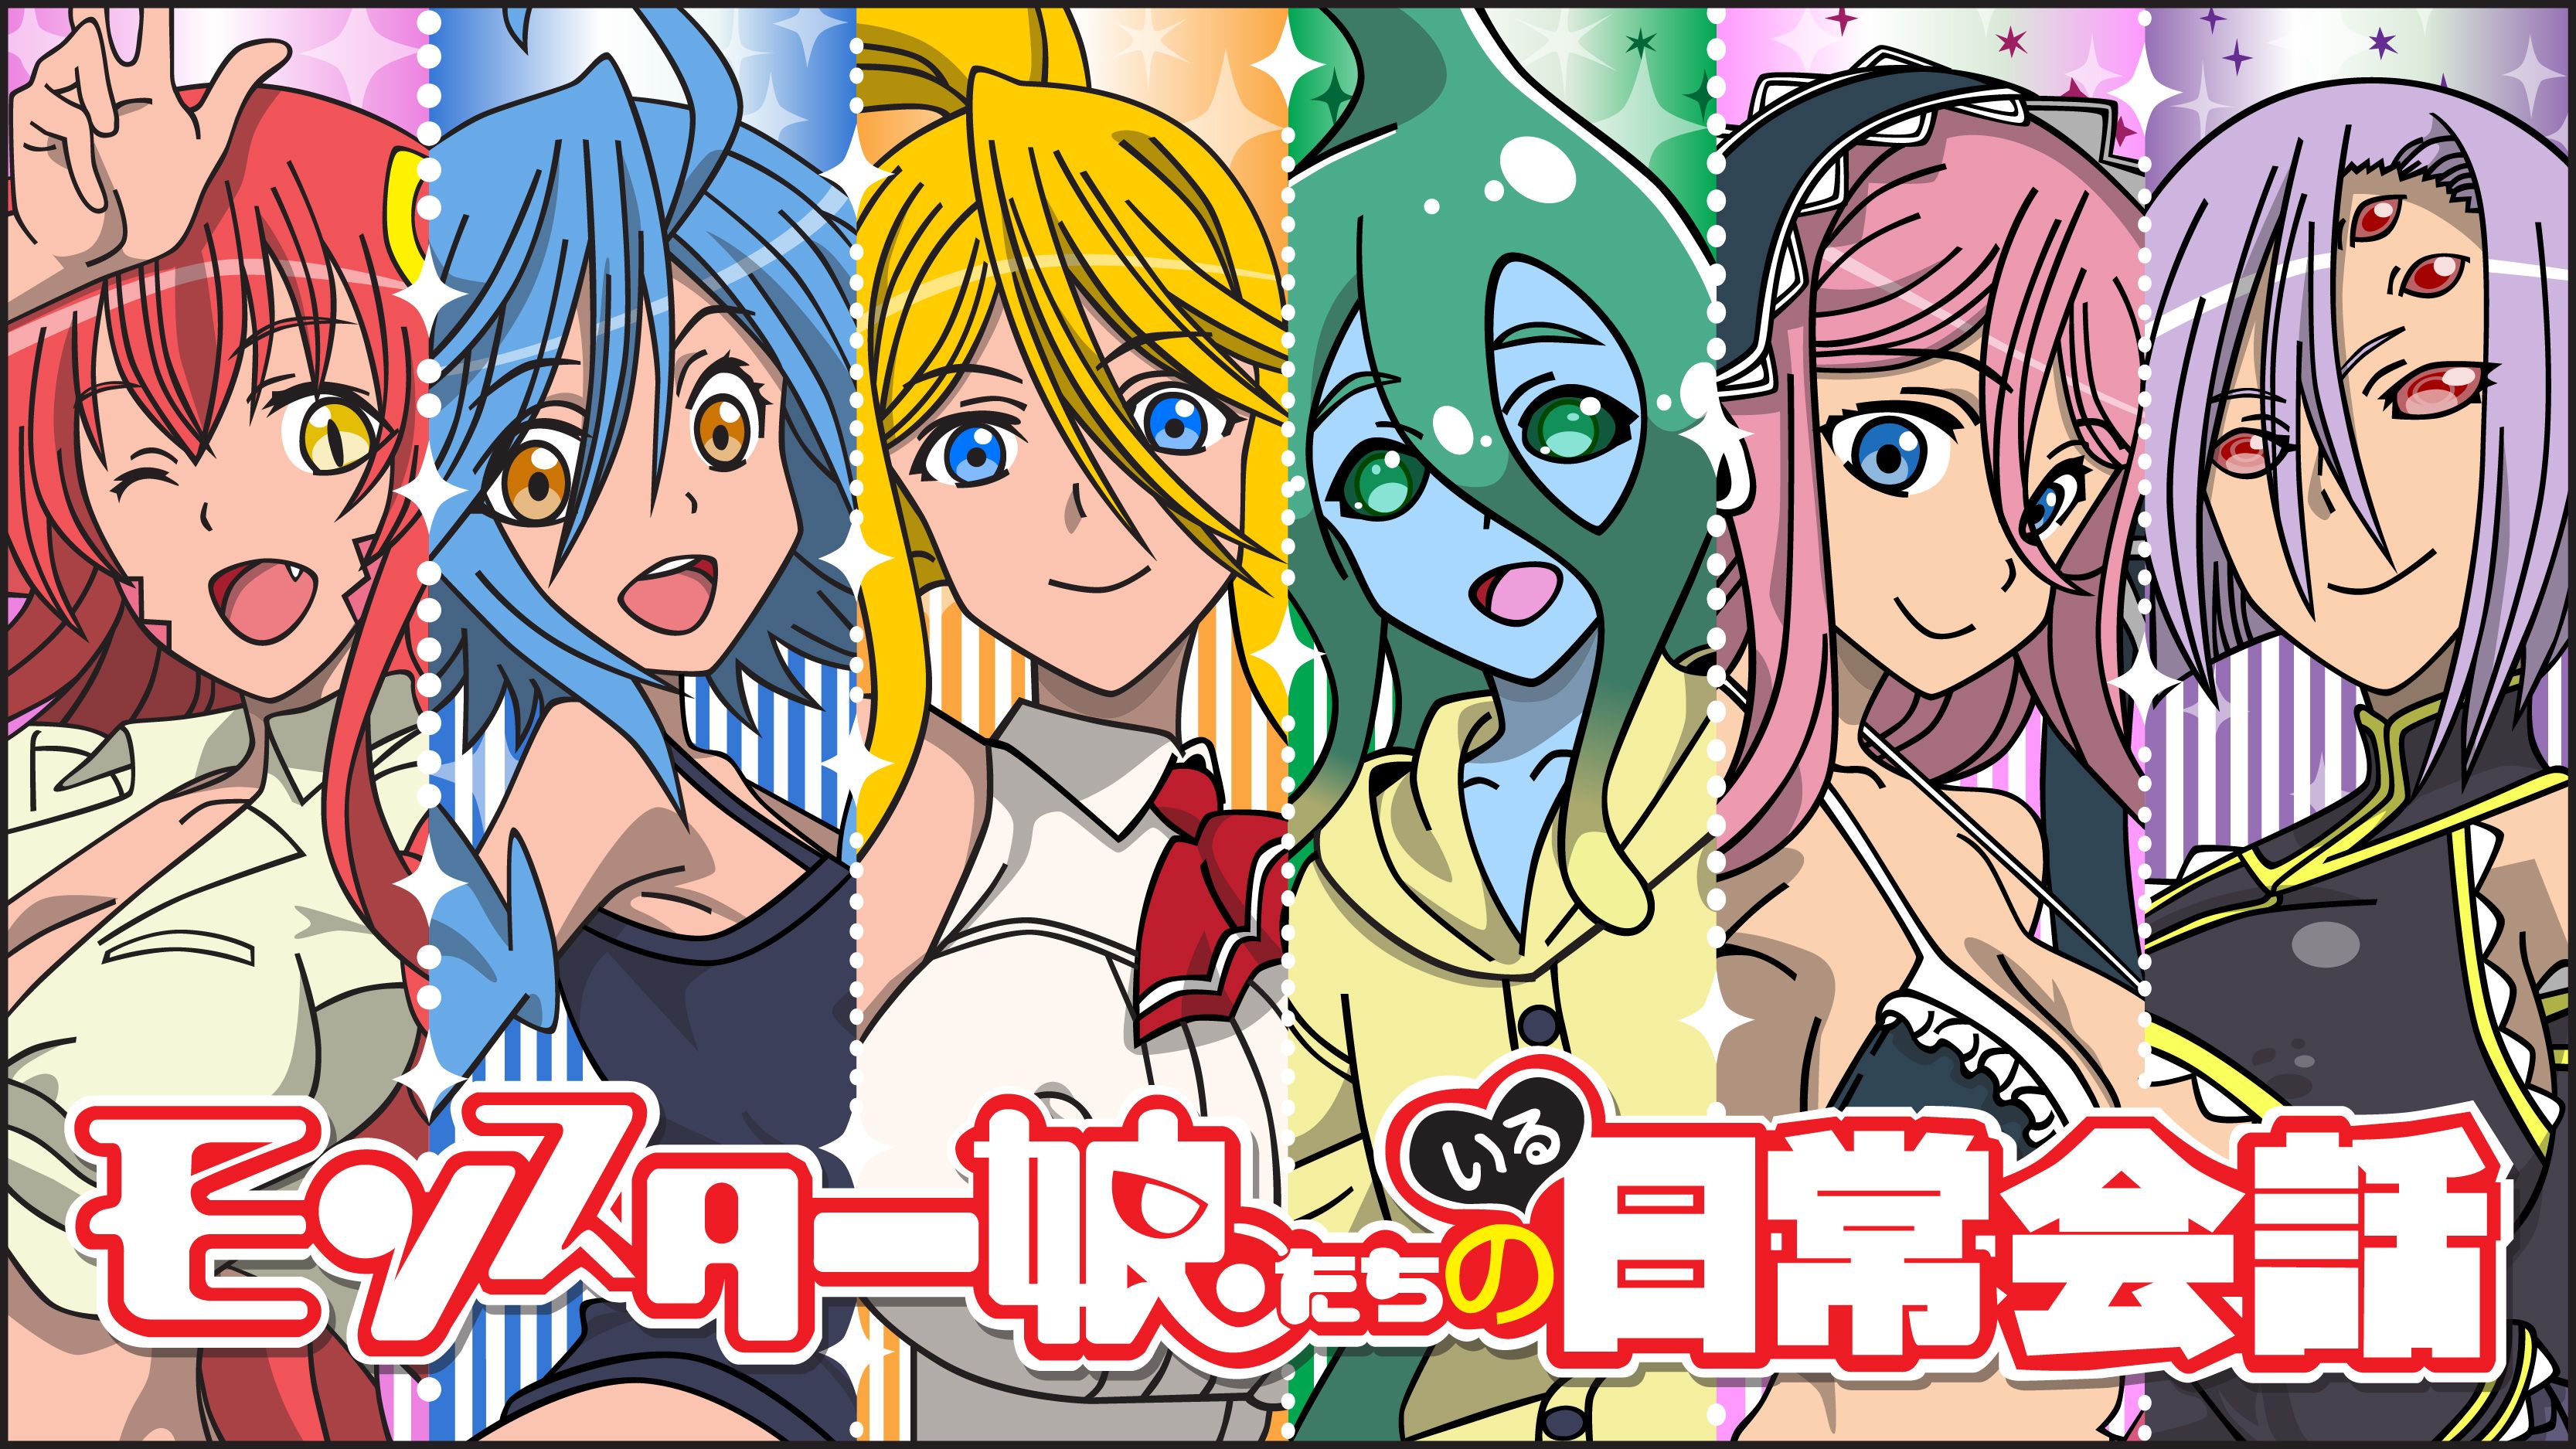 Monster Musume season information and more! DroidJournal